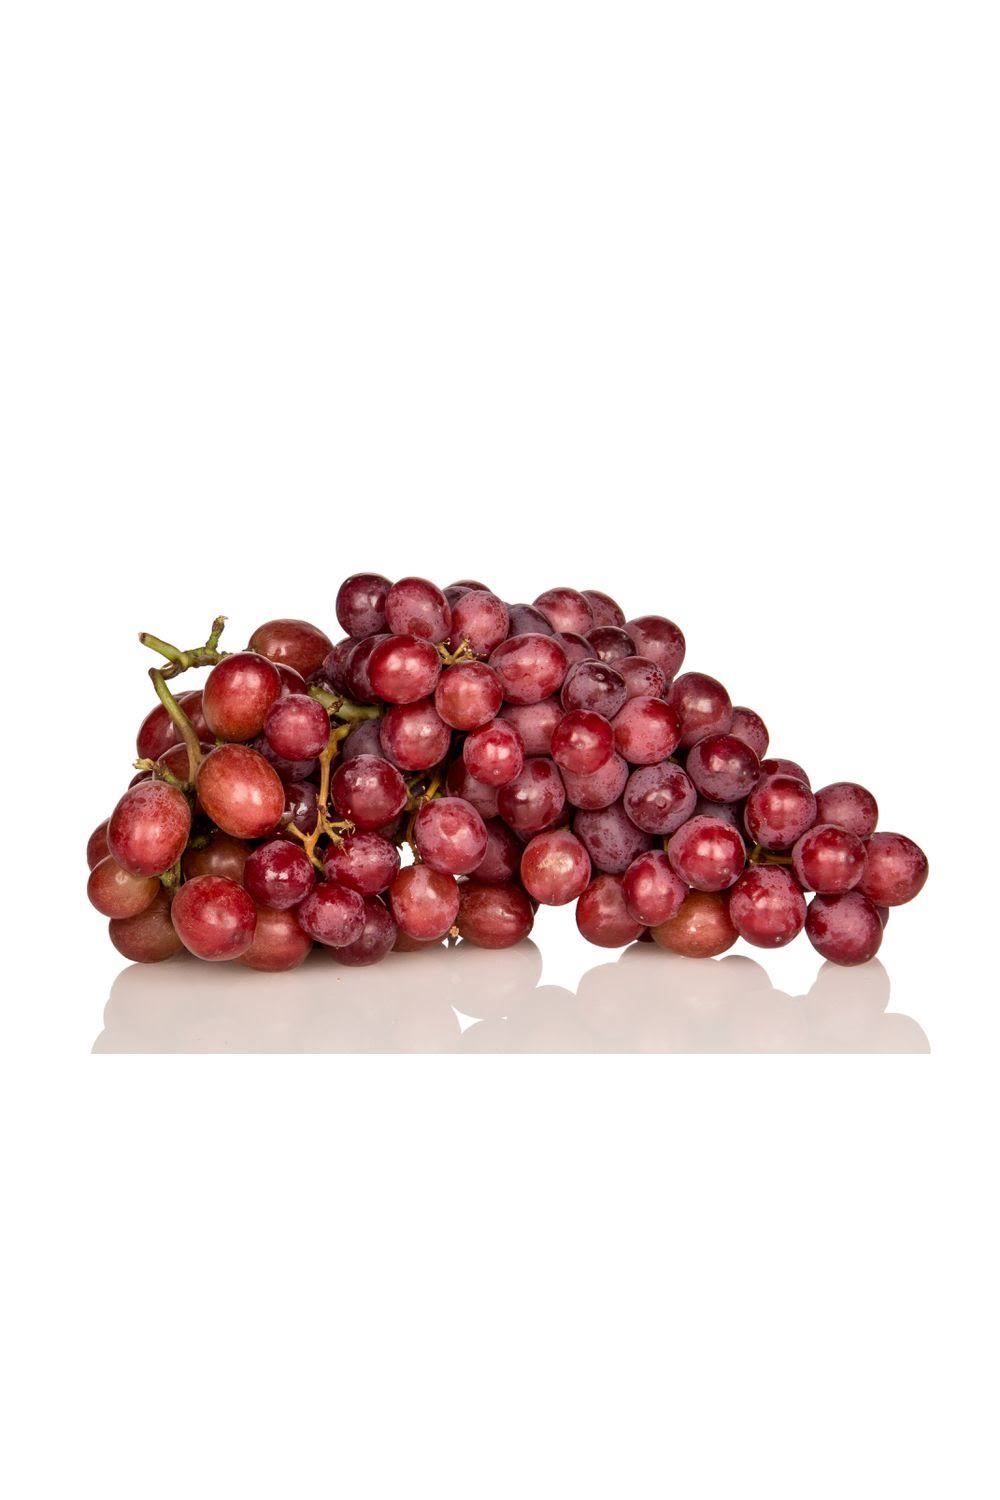 Azure Market Produce Flame Seedless Organic Grapes, 2 lb